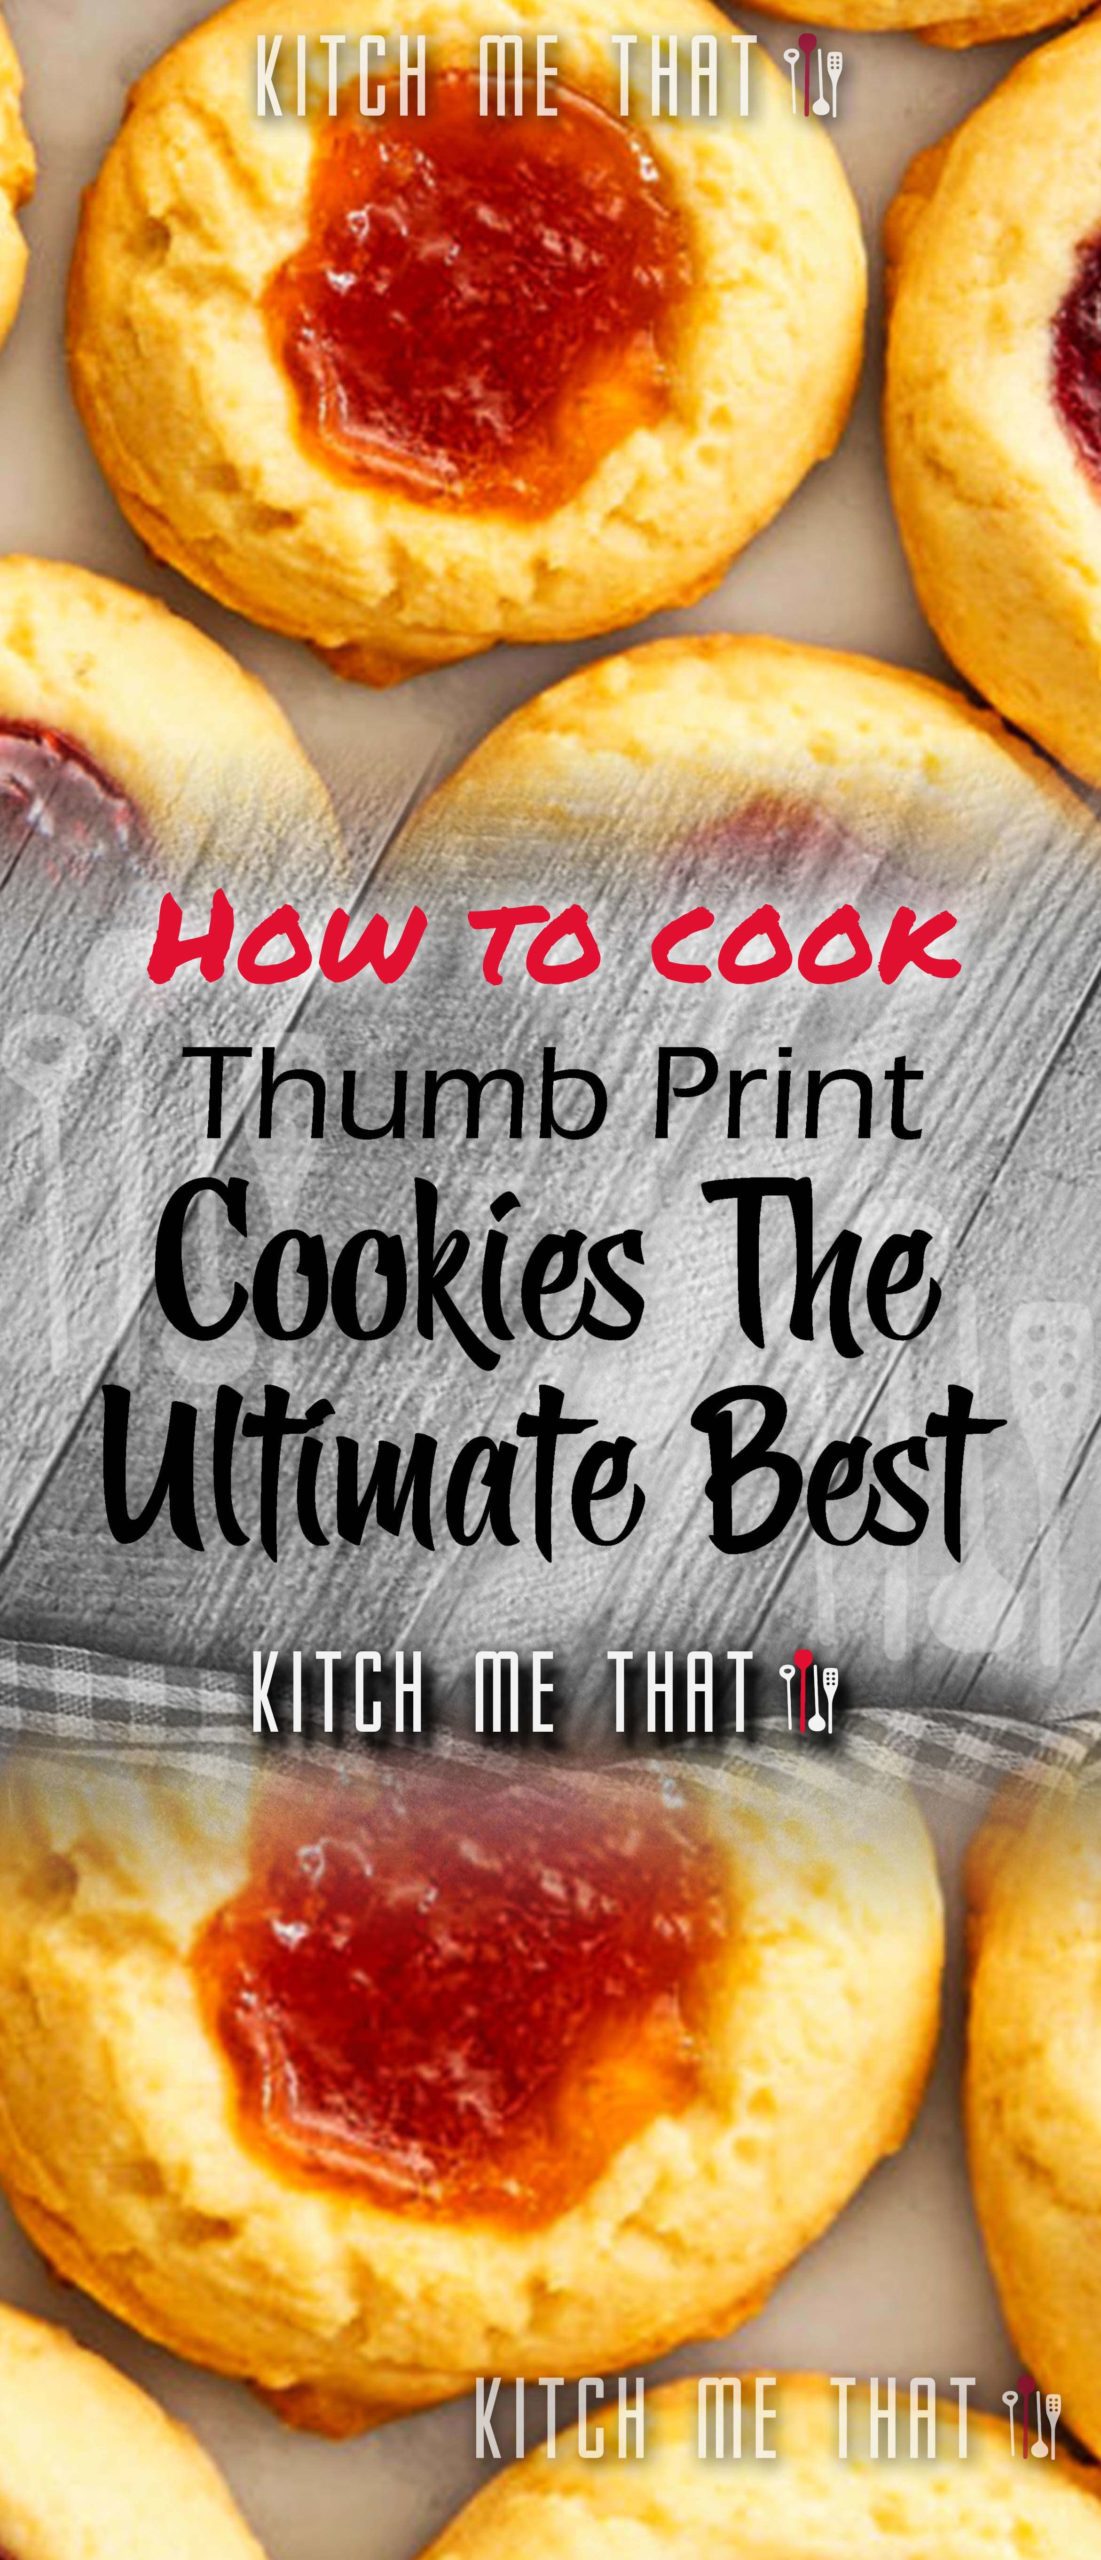 Thumb Print Cookies The Ultimate Best!